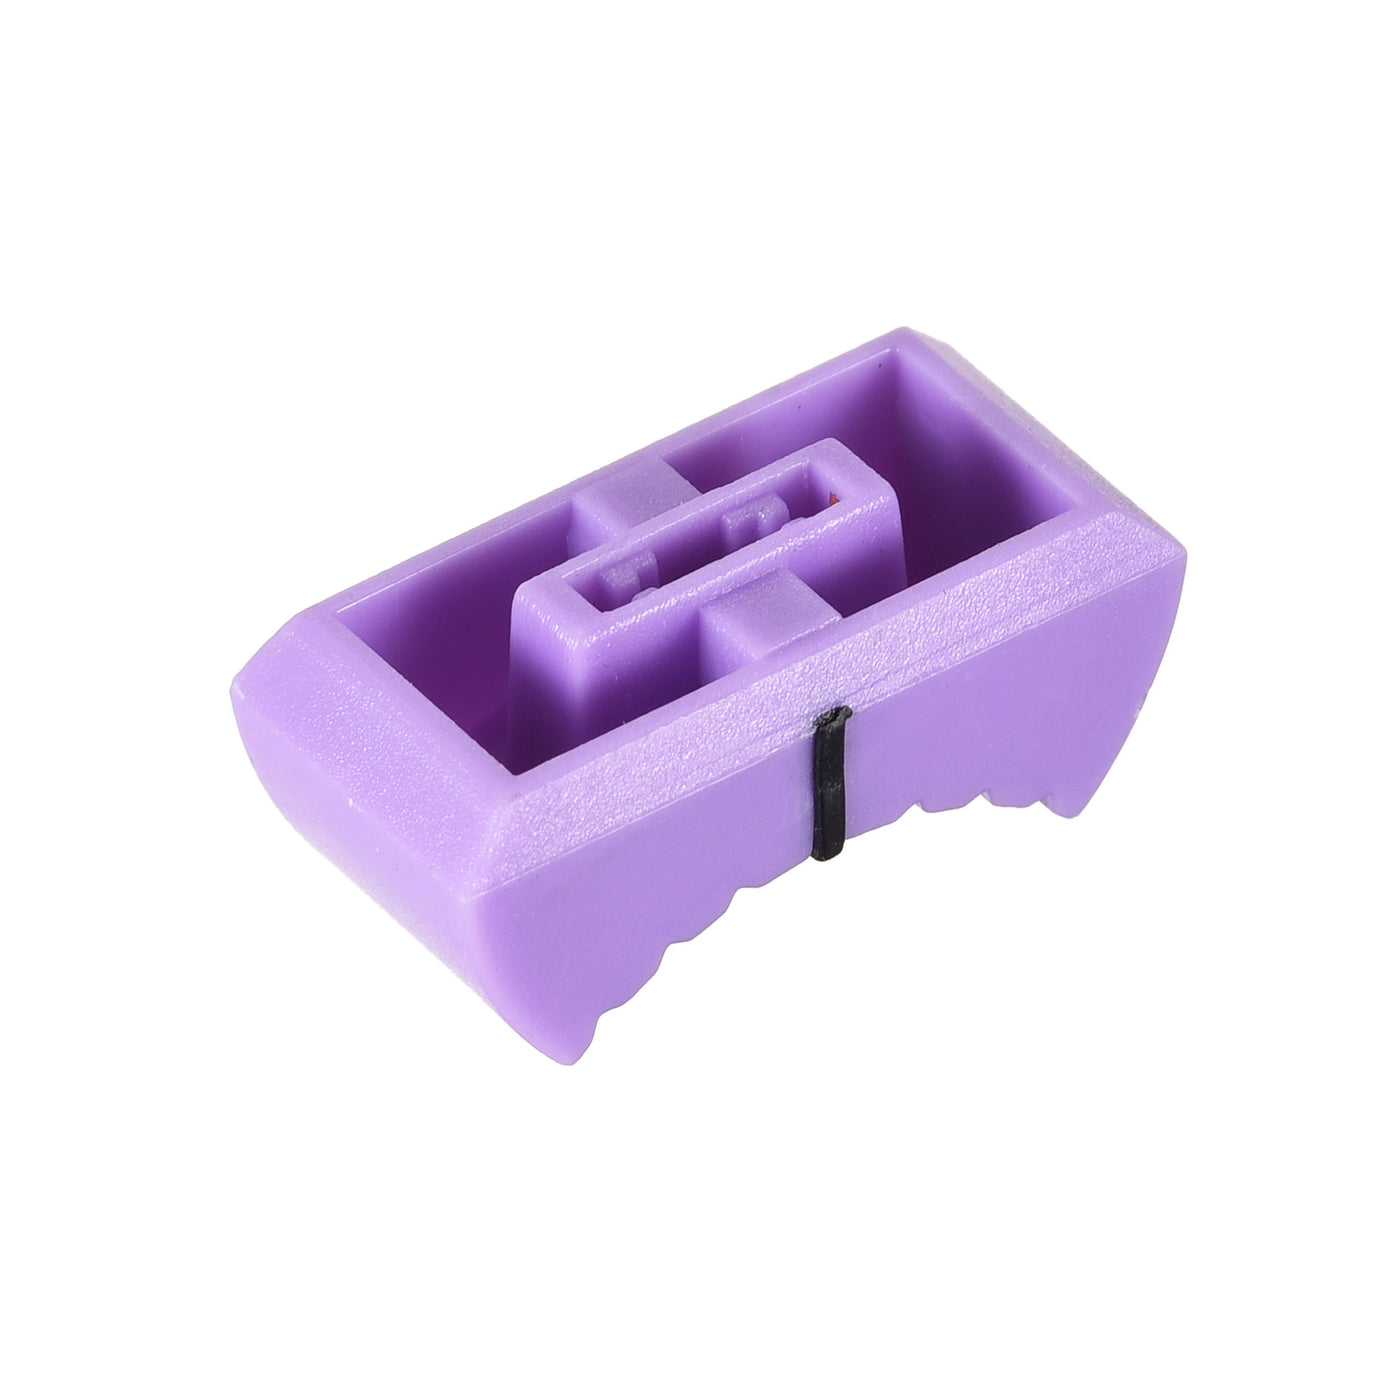 Uxcell Uxcell Plastic Straight Slide Potentiometer Flat Push Knob Insert Shaft 4x2mm Purple Black 10pcs